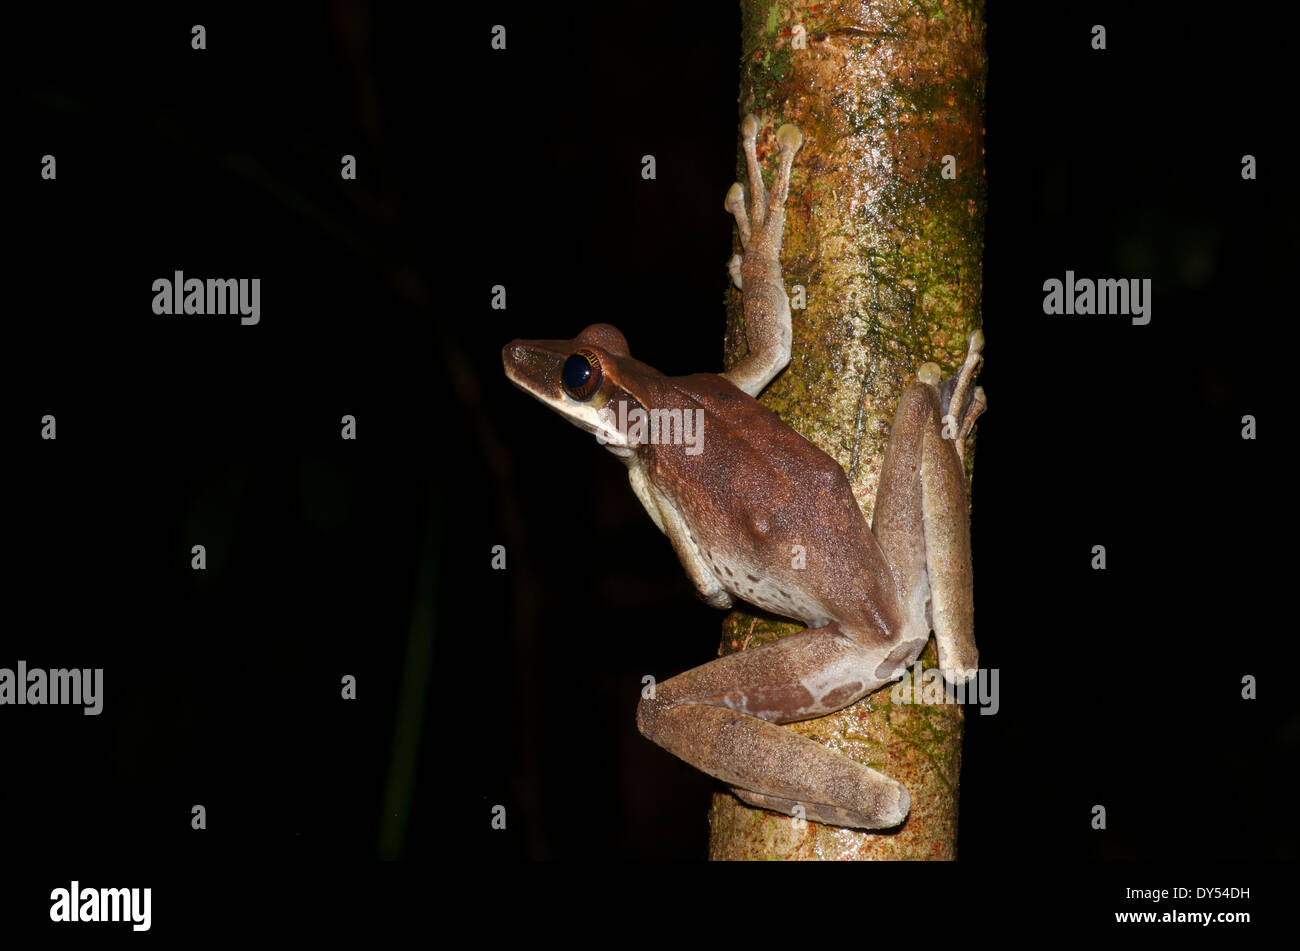 A Flat-headed Bromeliad Treefrog (Osteocephalus planiceps) ready to leap away in the Amazonian rainforest in Loreto, Peru. Stock Photo